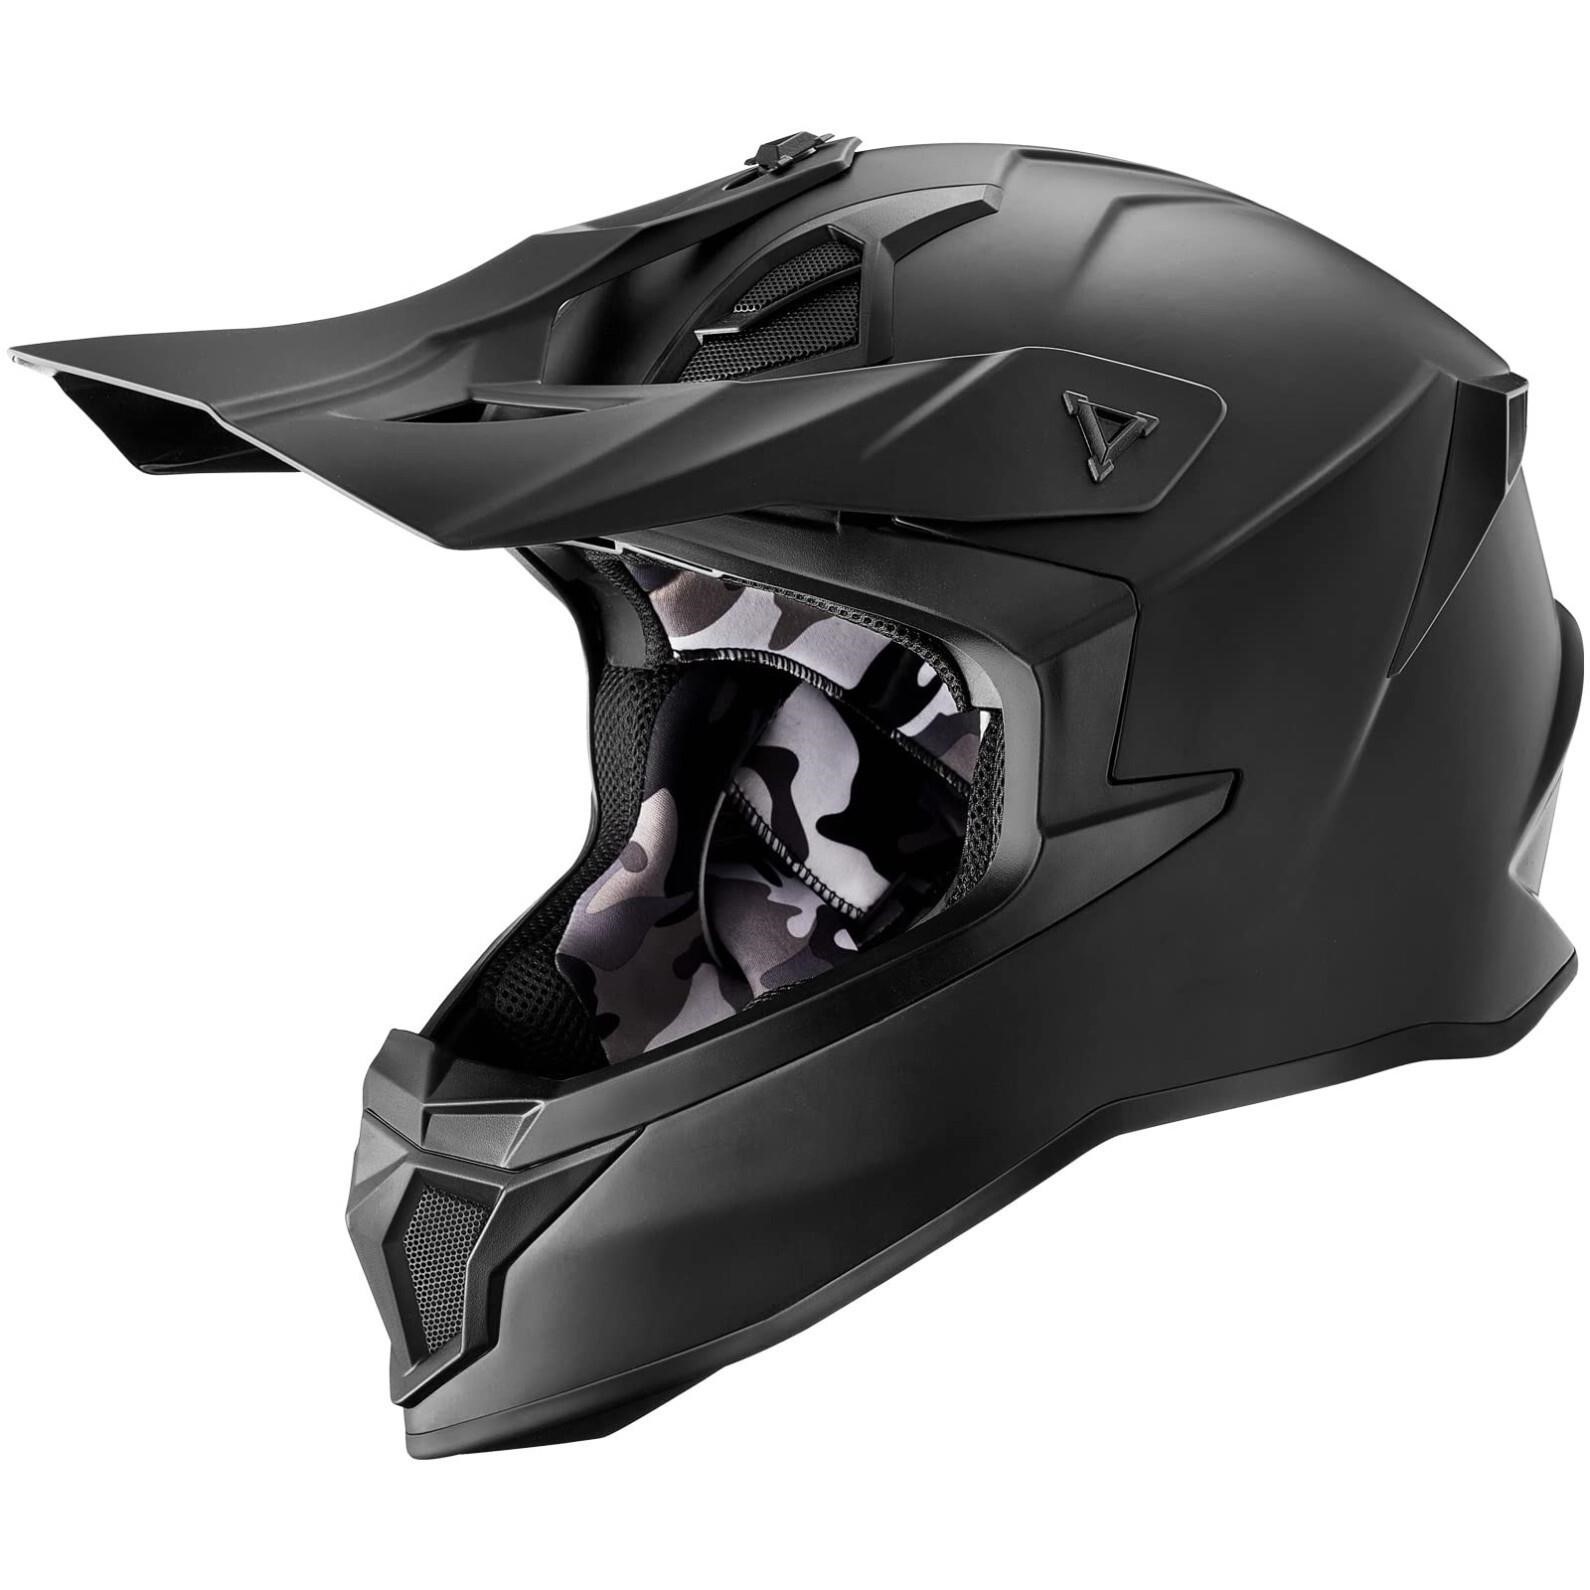 ILM Adult Dirt Bike Fiberglass Helmet Lightweight